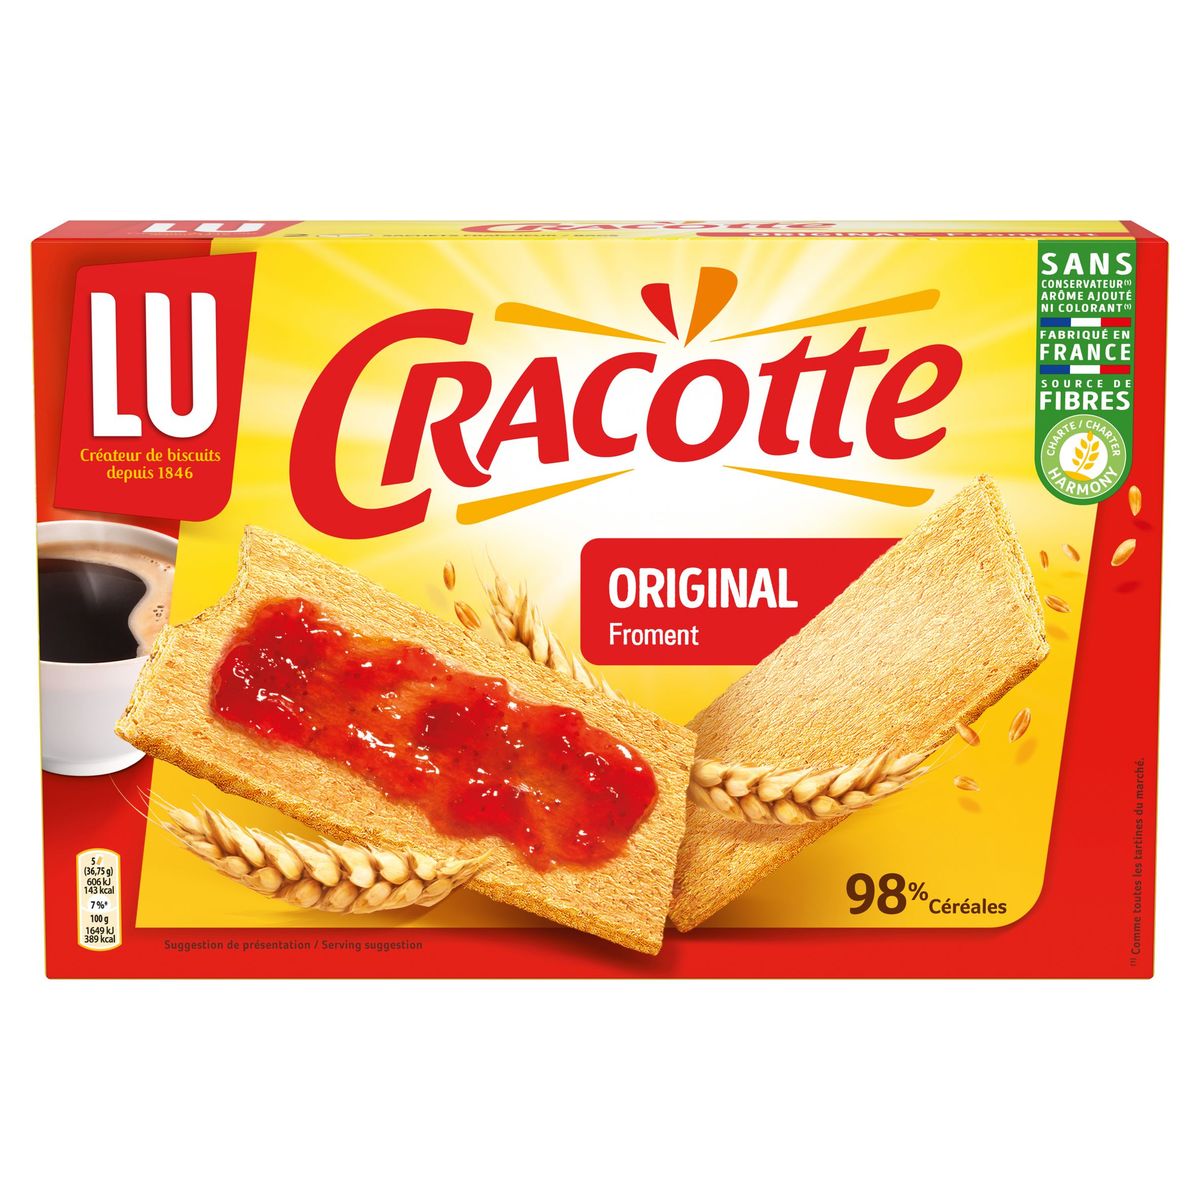 LU Cracotte Original Froment 250 g